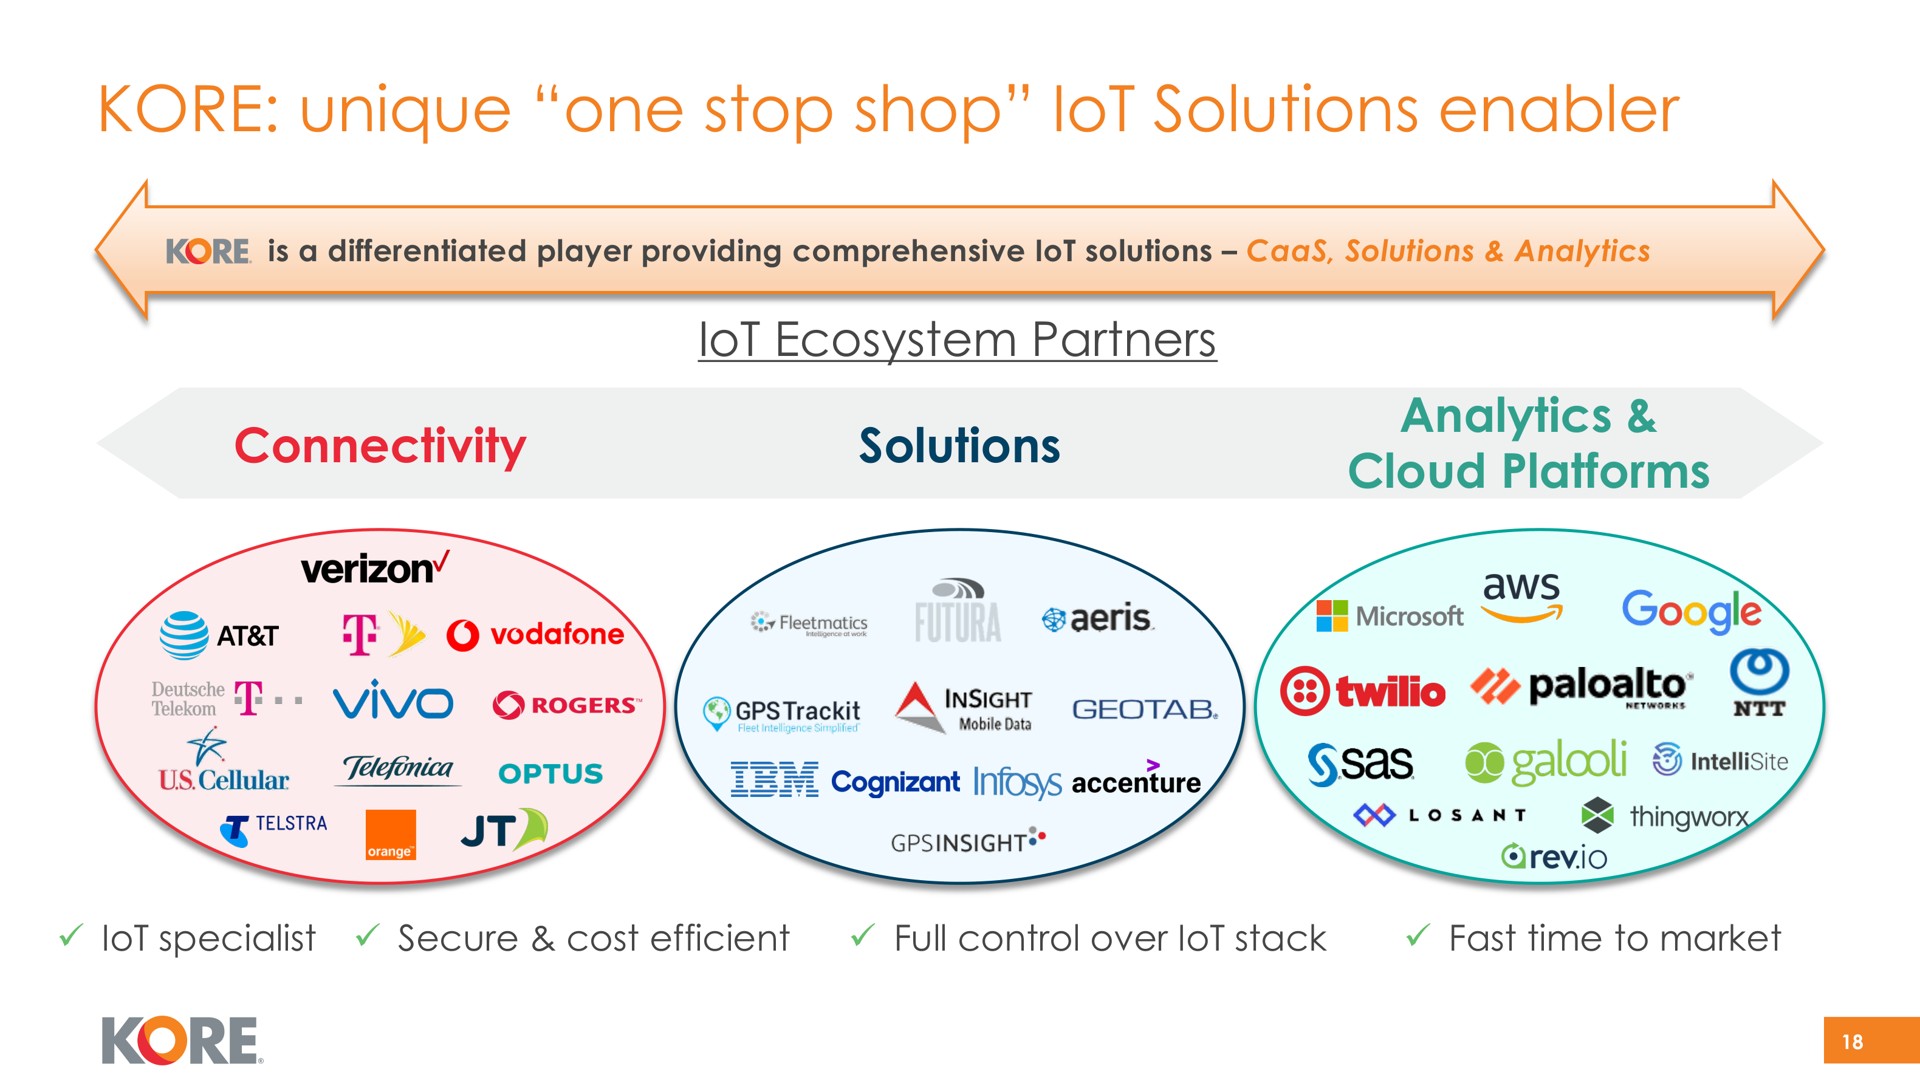 kore unique one stop shop solutions enabler ecosystem partners connectivity solutions analytics cloud platforms lot | Kore